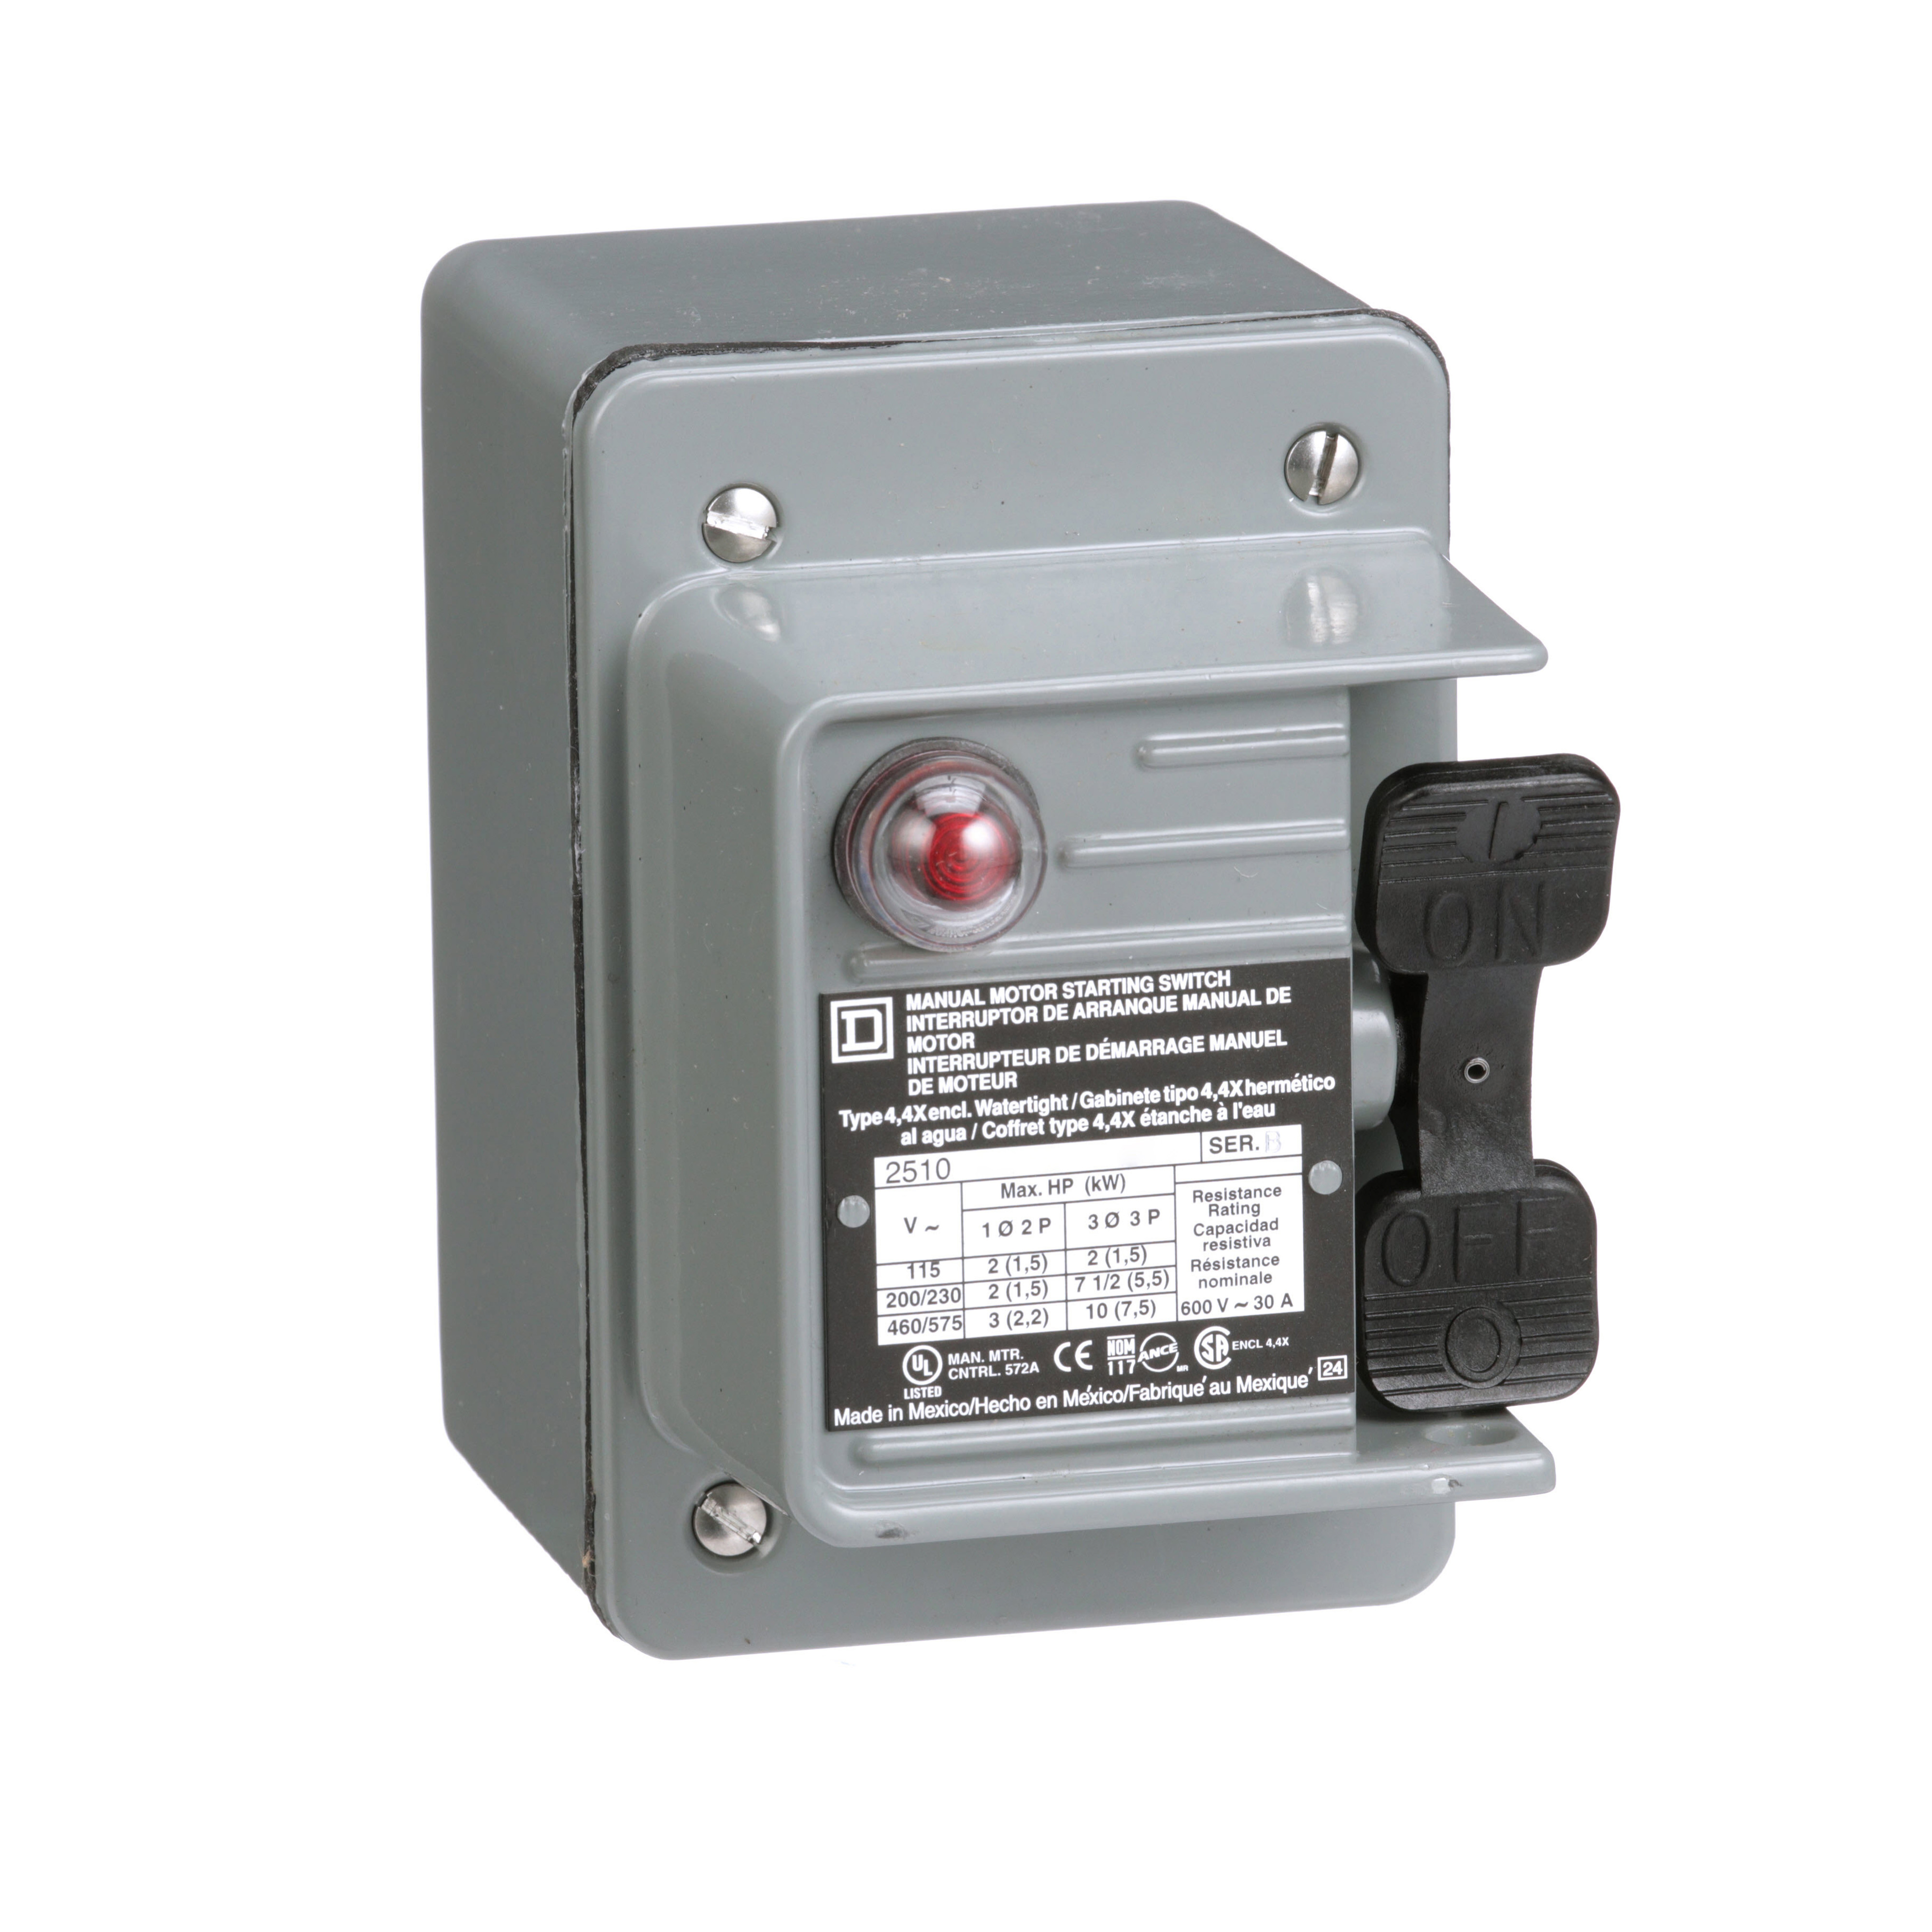 Switch, manual, 30A, 2 pole, 3 HP at 575 VAC, single phase, toggle operated, red 115 VAC indicator, NEMA 4, two conduit